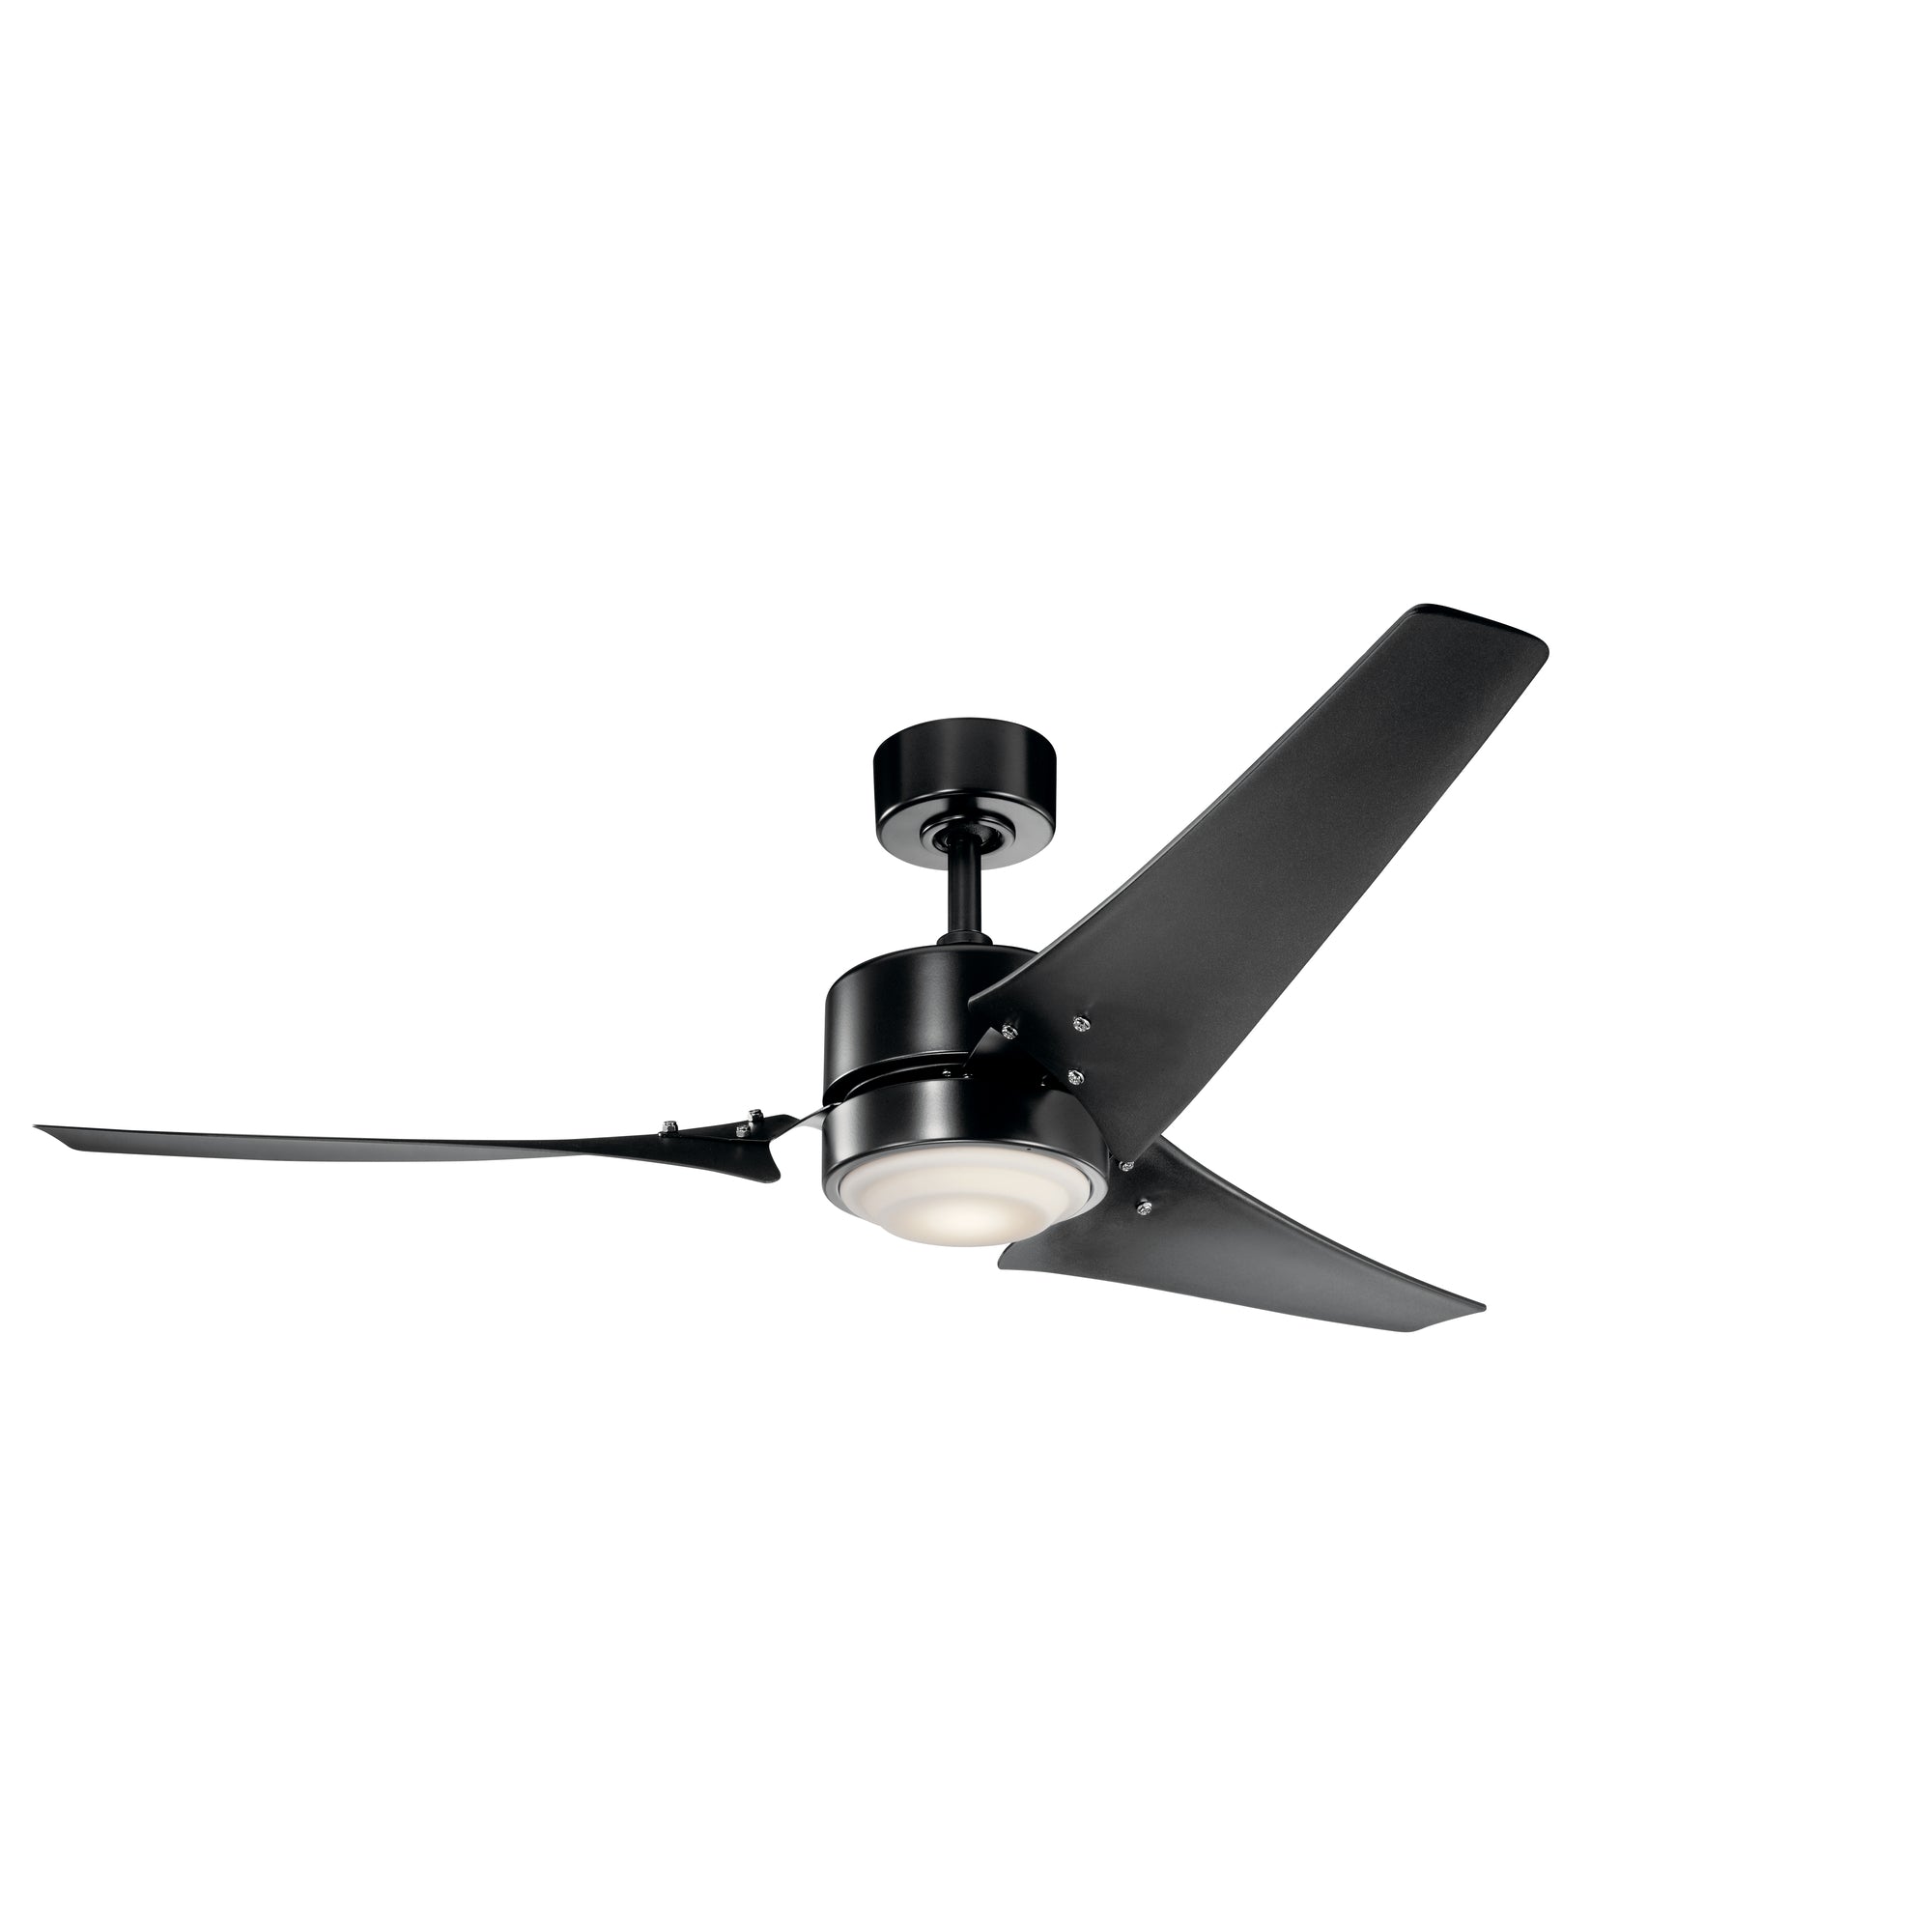 RANA Ceiling fan Black INTEGRATED LED - 310155SBK | KICHLER